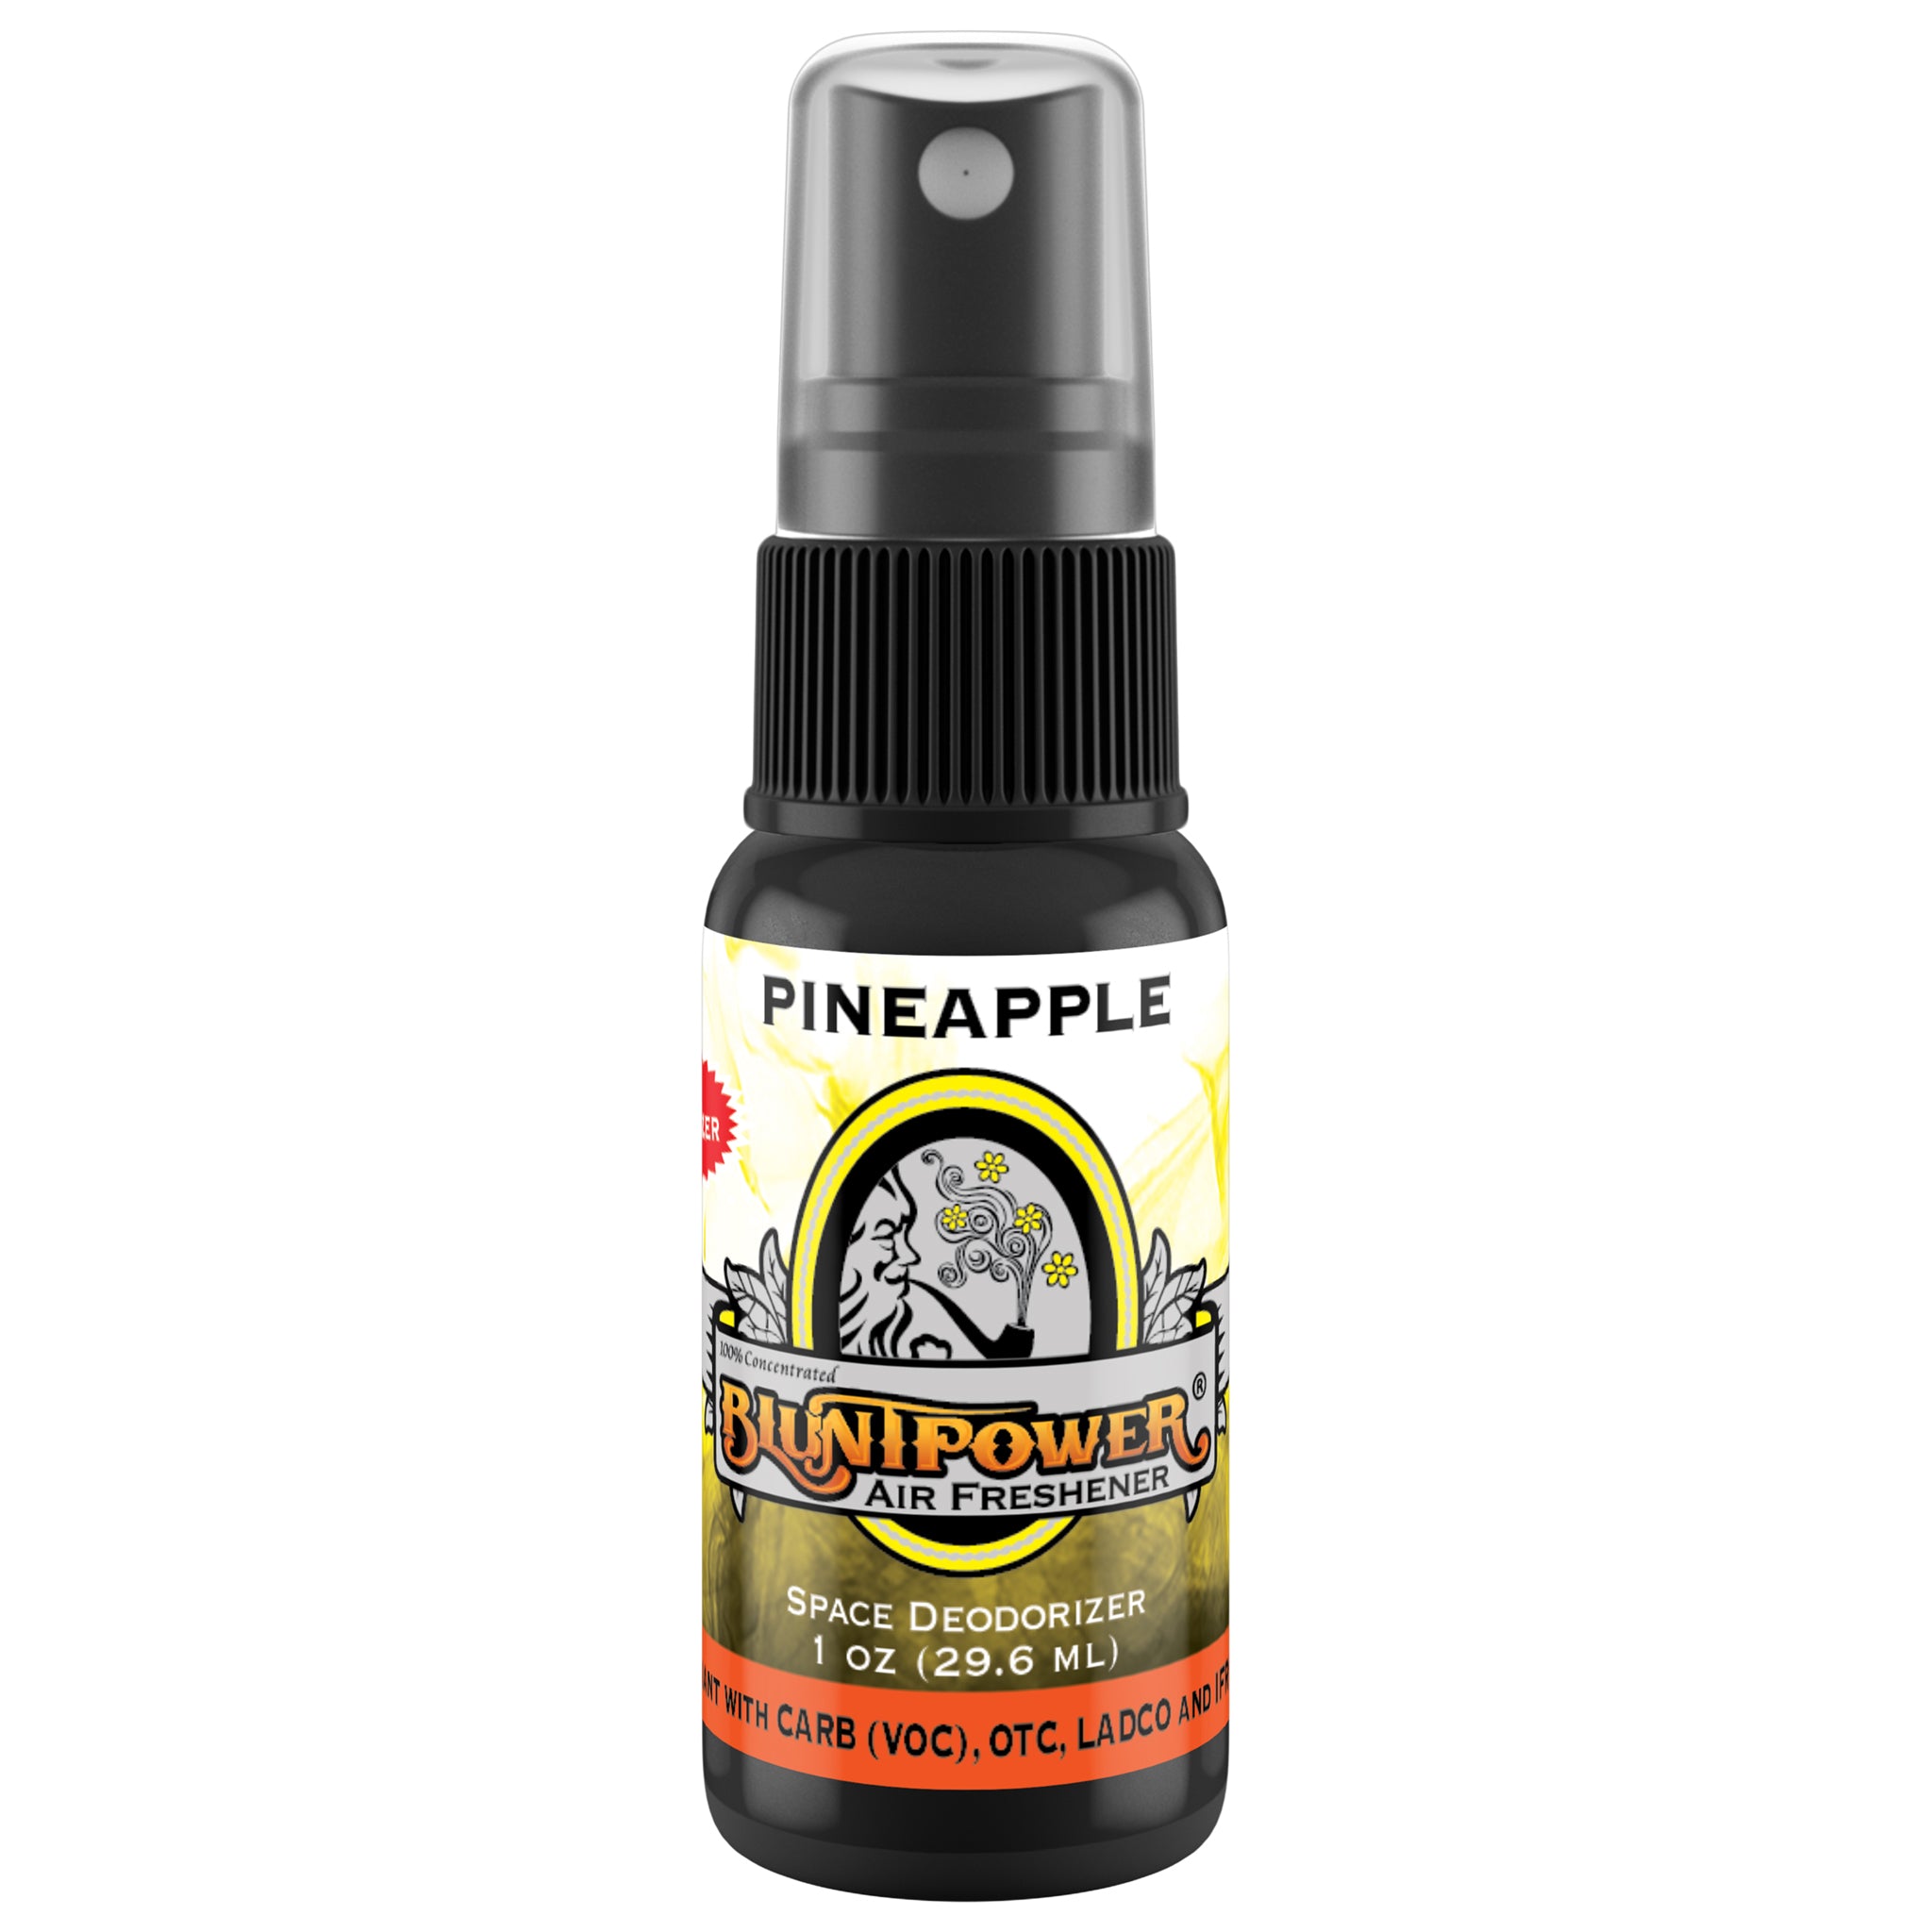 NEW BluntPower Mini Air Fresheners (1 FL OZ) Fragrance: Pineapple